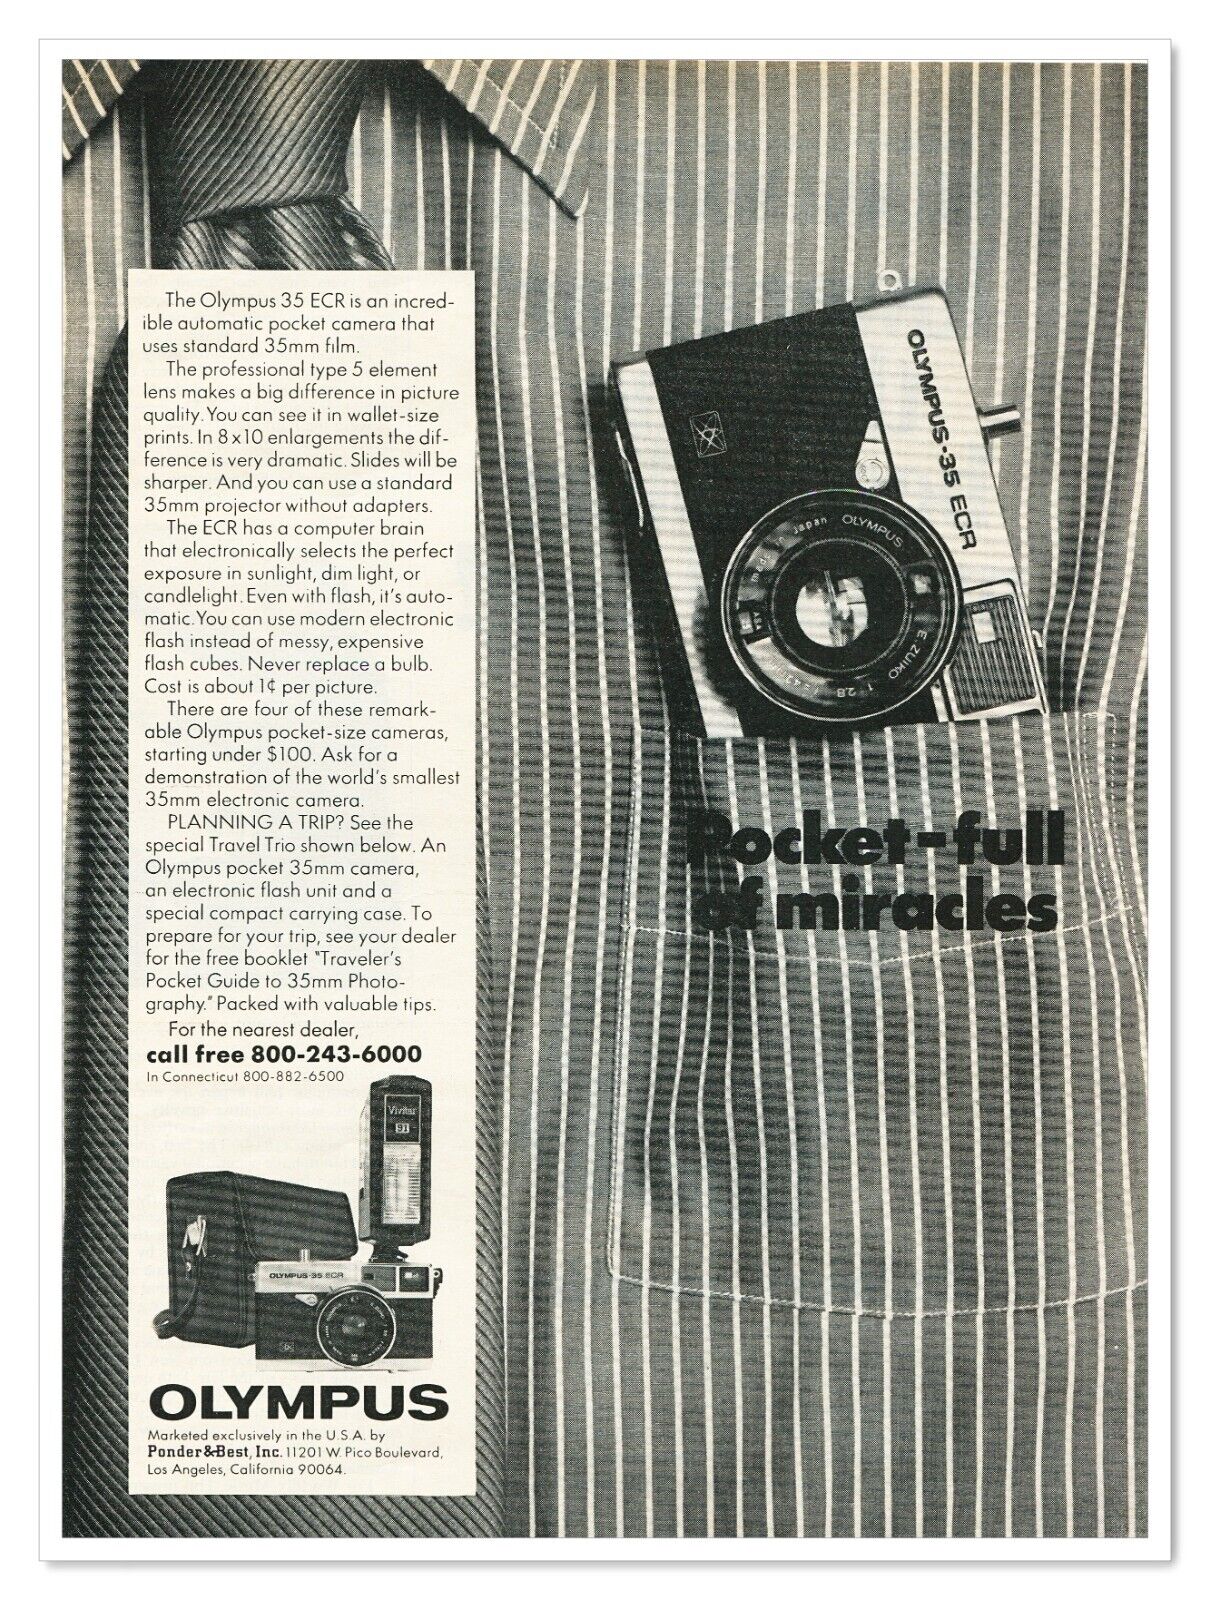 Print Ad Olympus 35 ECR Camera Pocket-Full Memories Vintage 1972 Advertisement